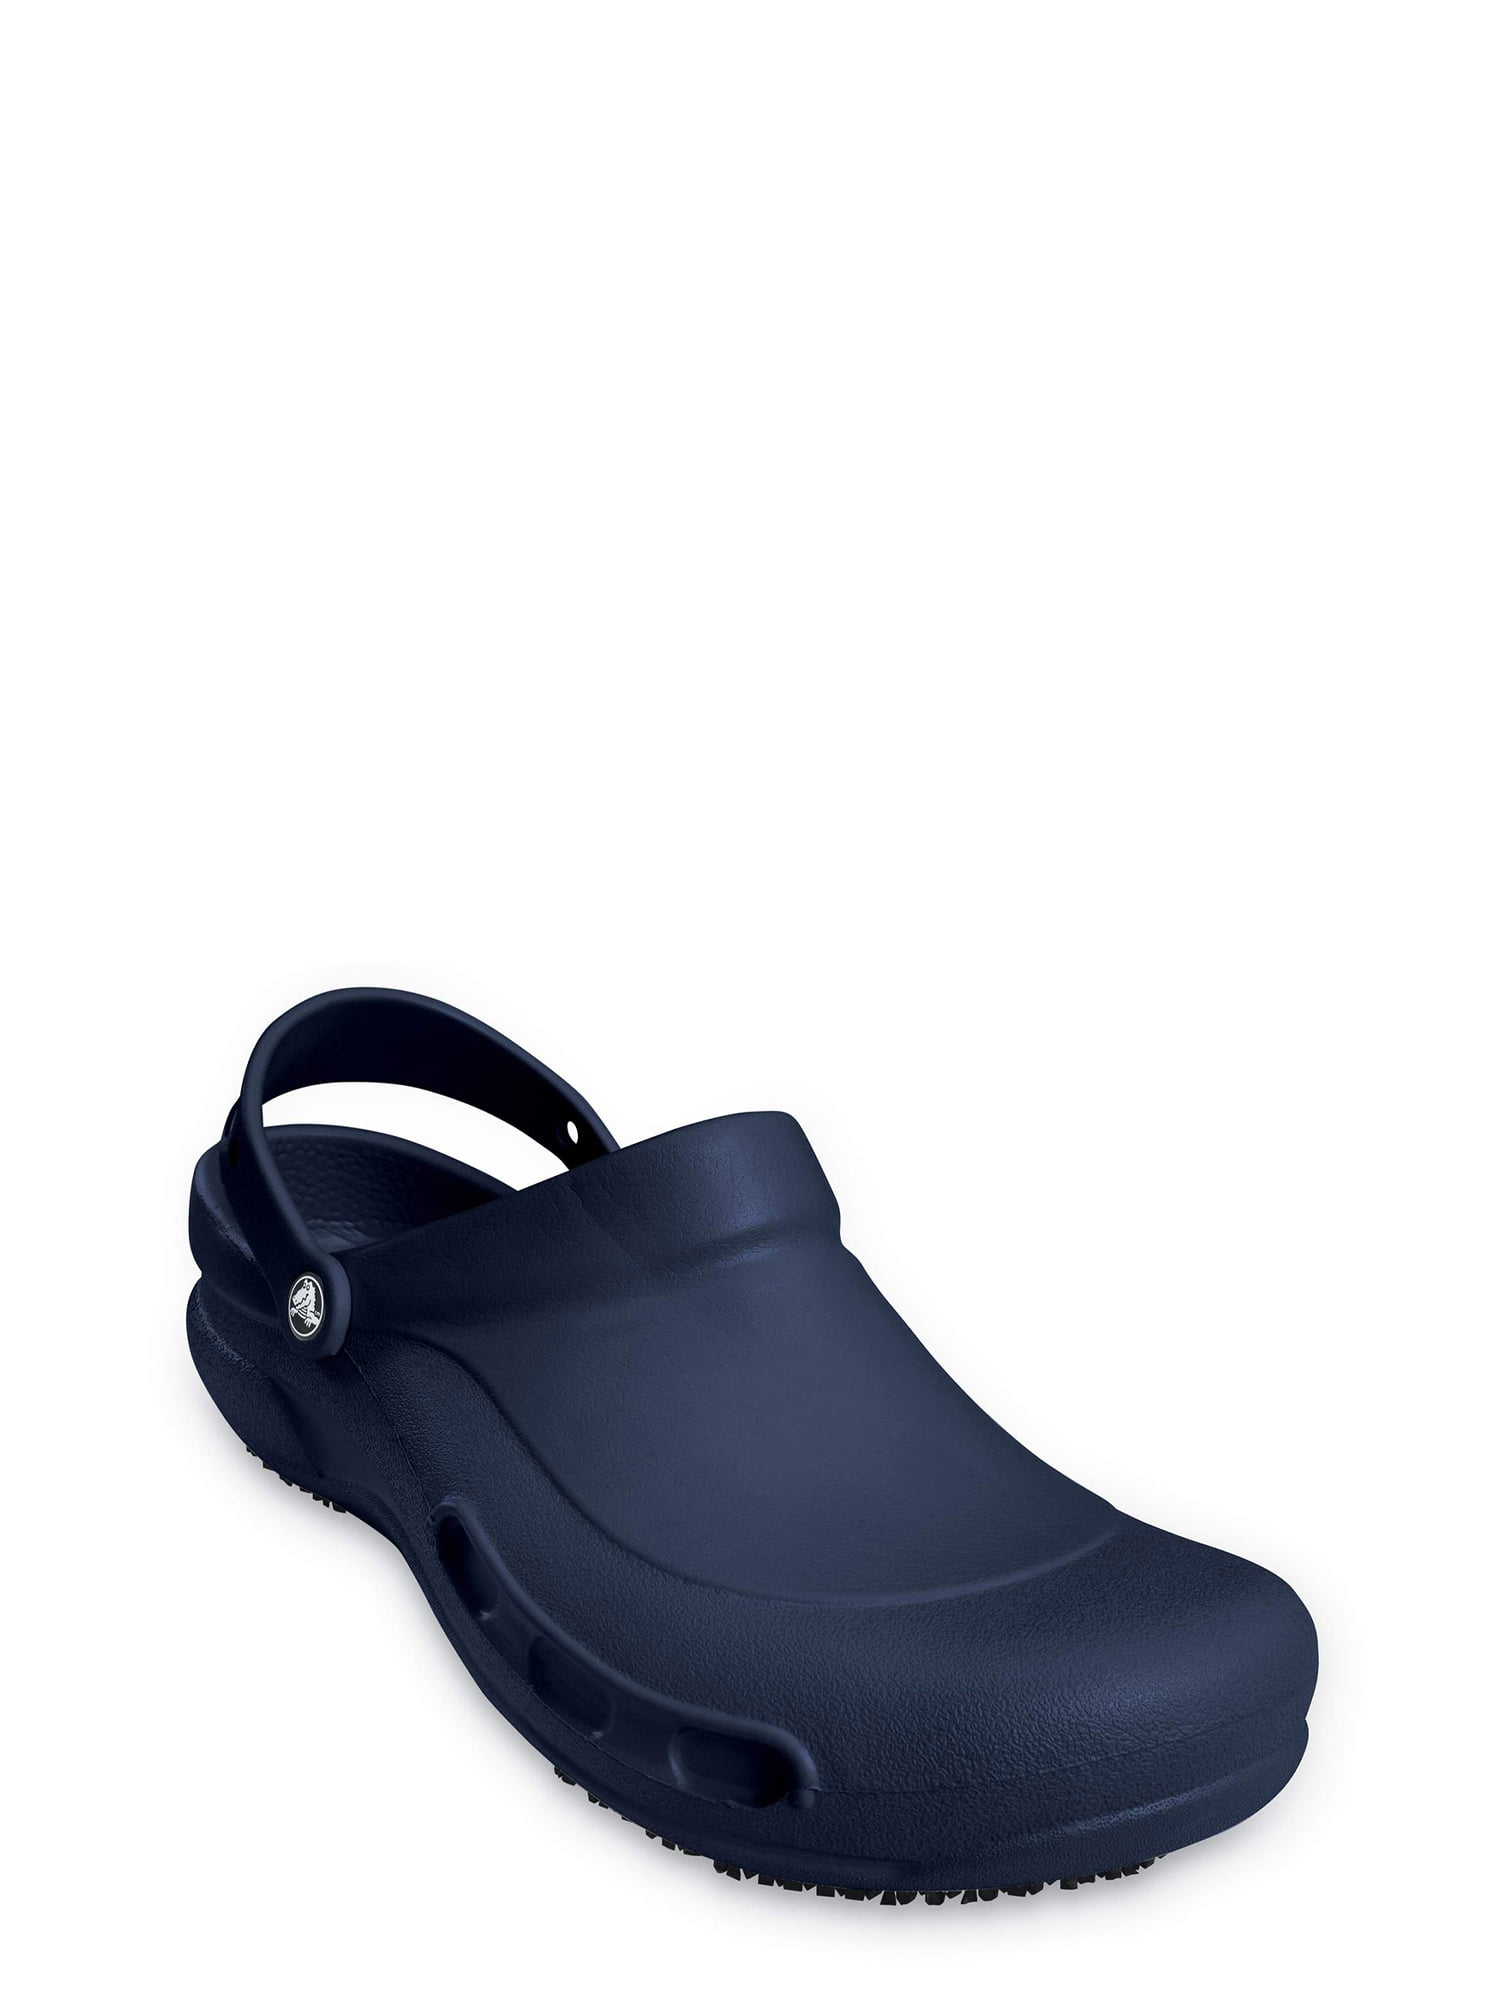 Crocs Yellow /Blue  Comfortable  Work Clogs Casual Wear Footwear Anti Slip 